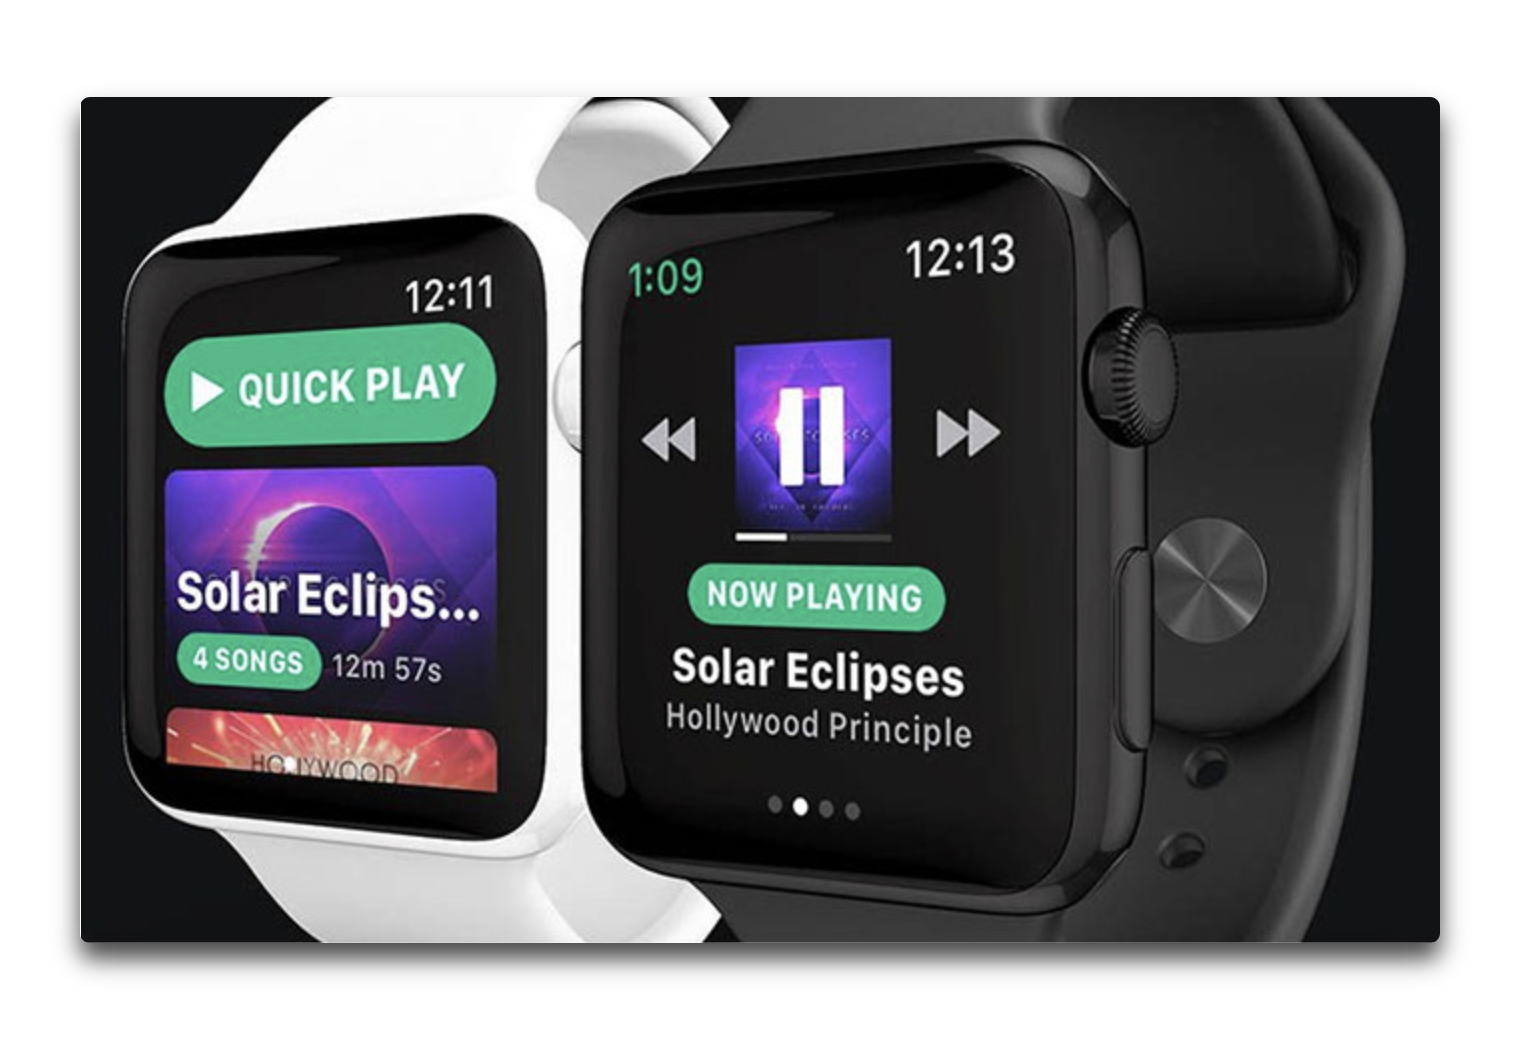 Spotify for Apple Watchは、2018年6月のWWDC で導入される可能性